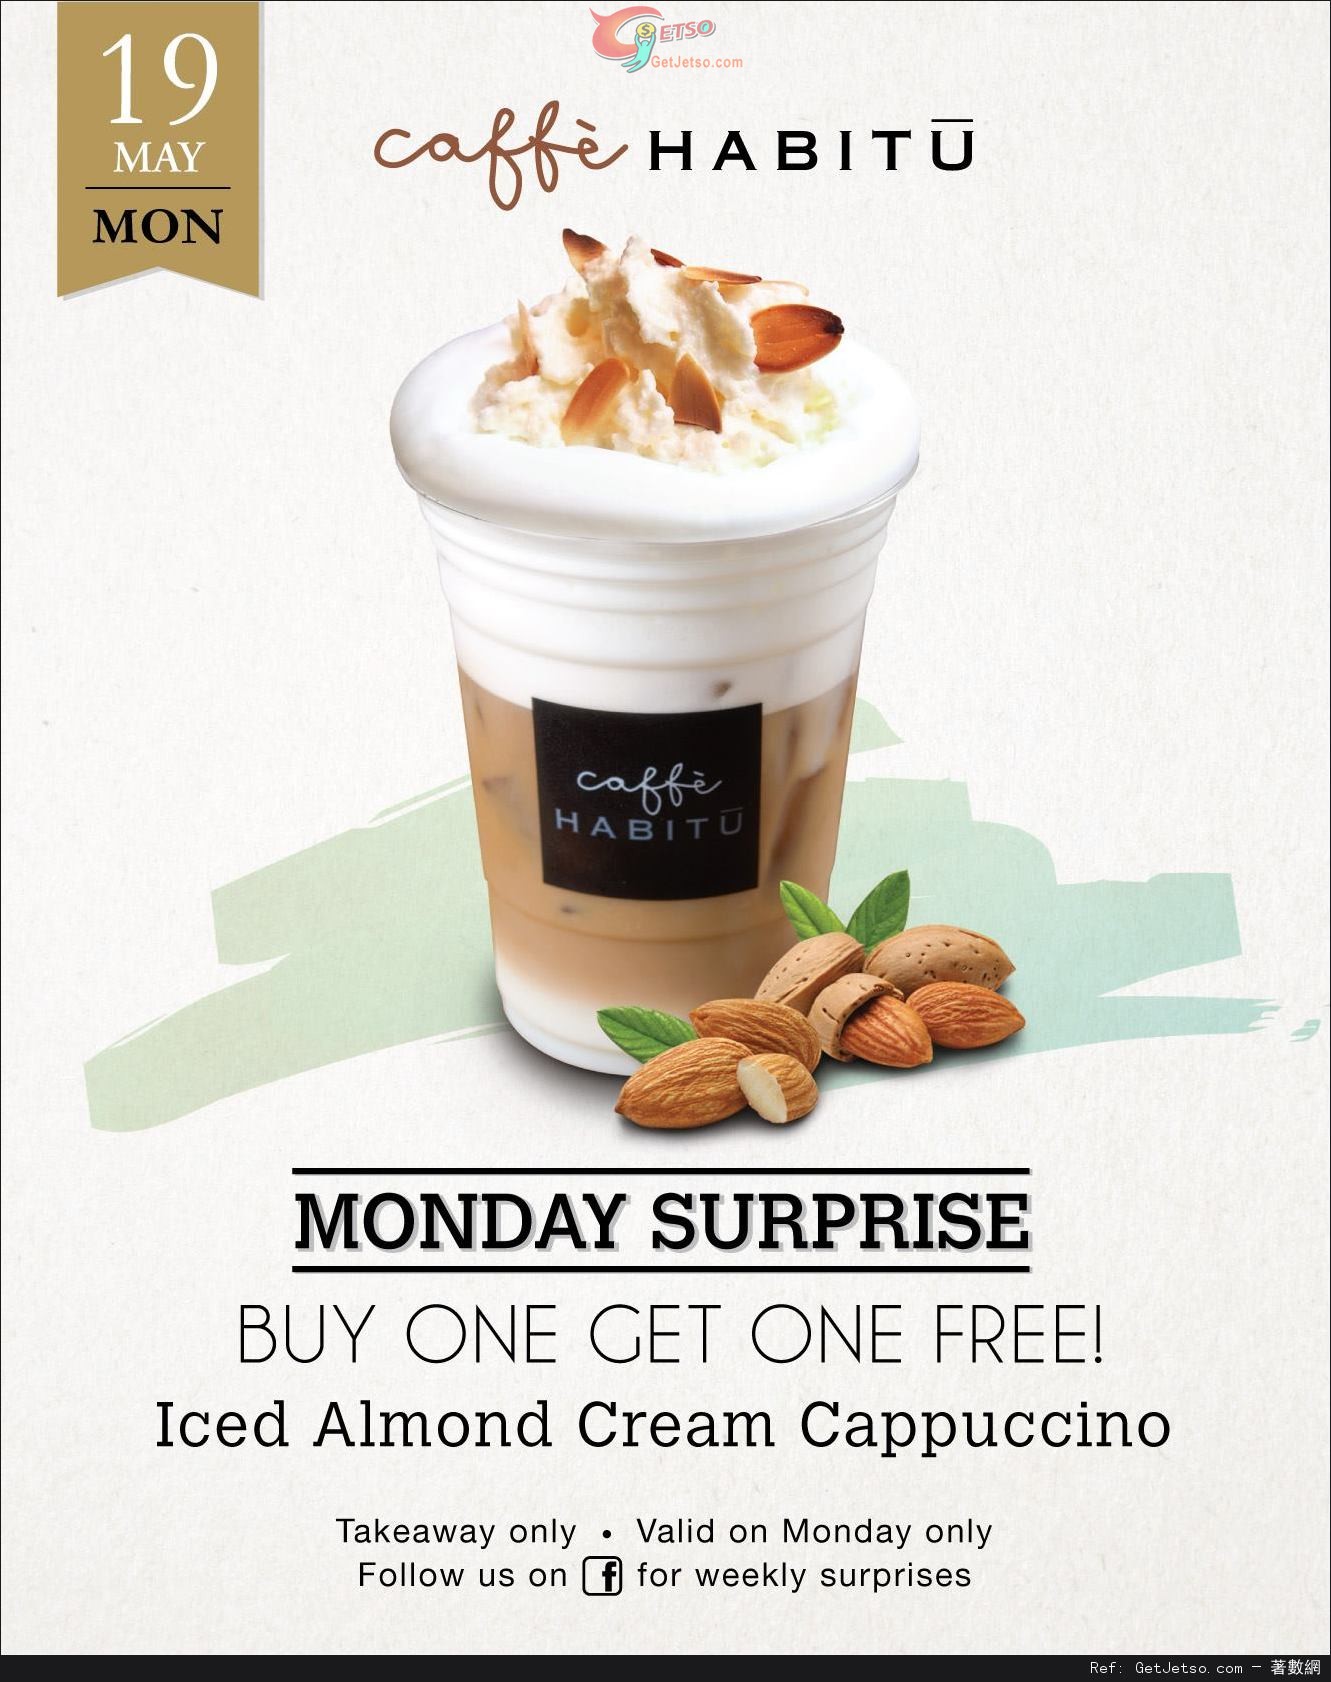 Caffe HABITU Iced Almond Cream Cappuccino 買1送1優惠(14年5月19日)圖片1